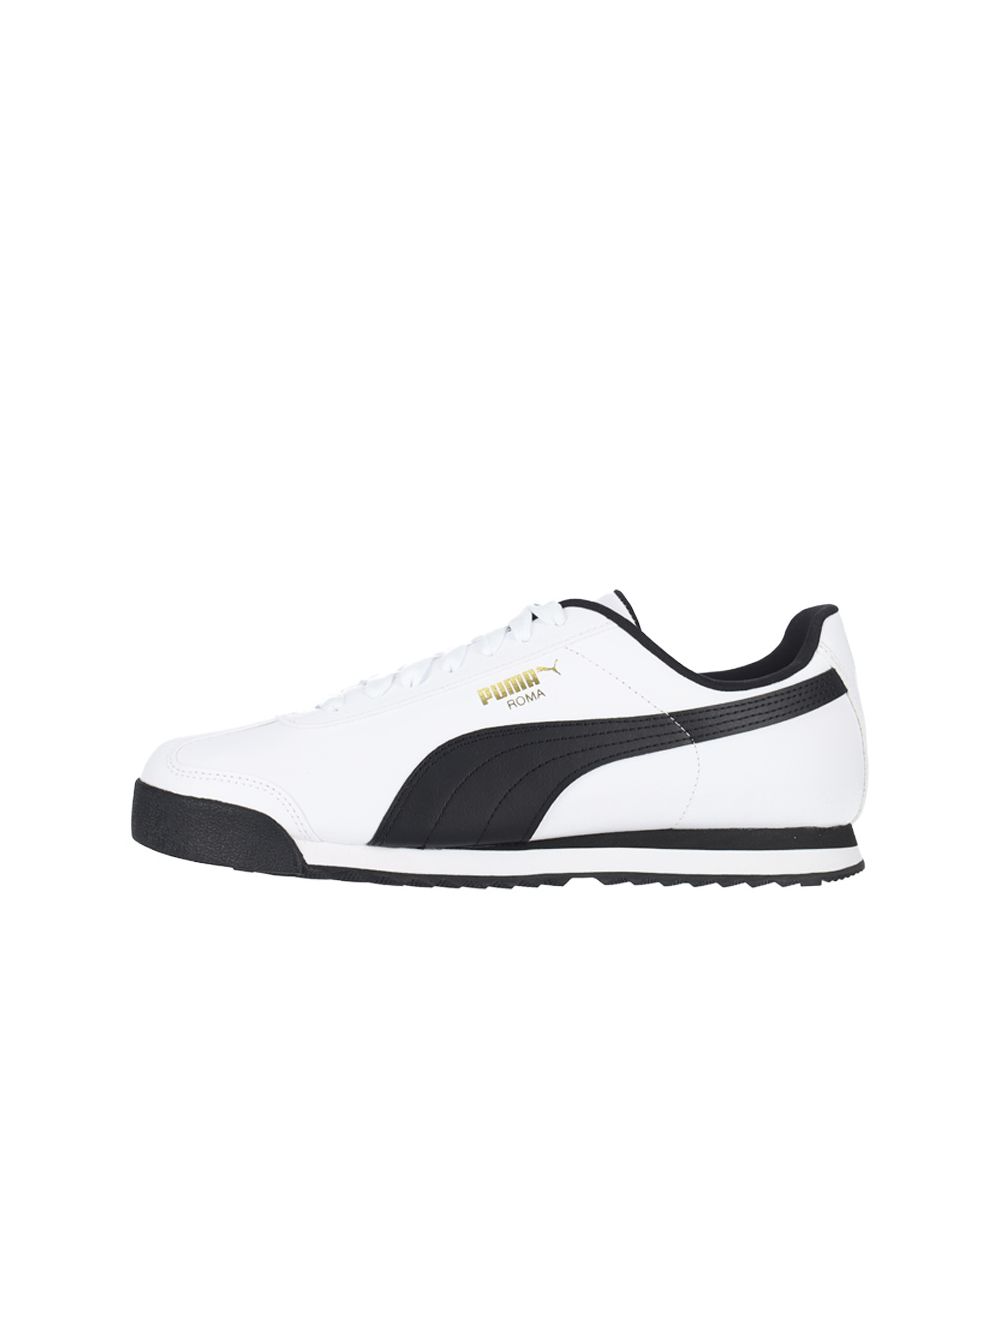 Shop Puma Roma Basic Shoe Mens White/Black | Studio 88